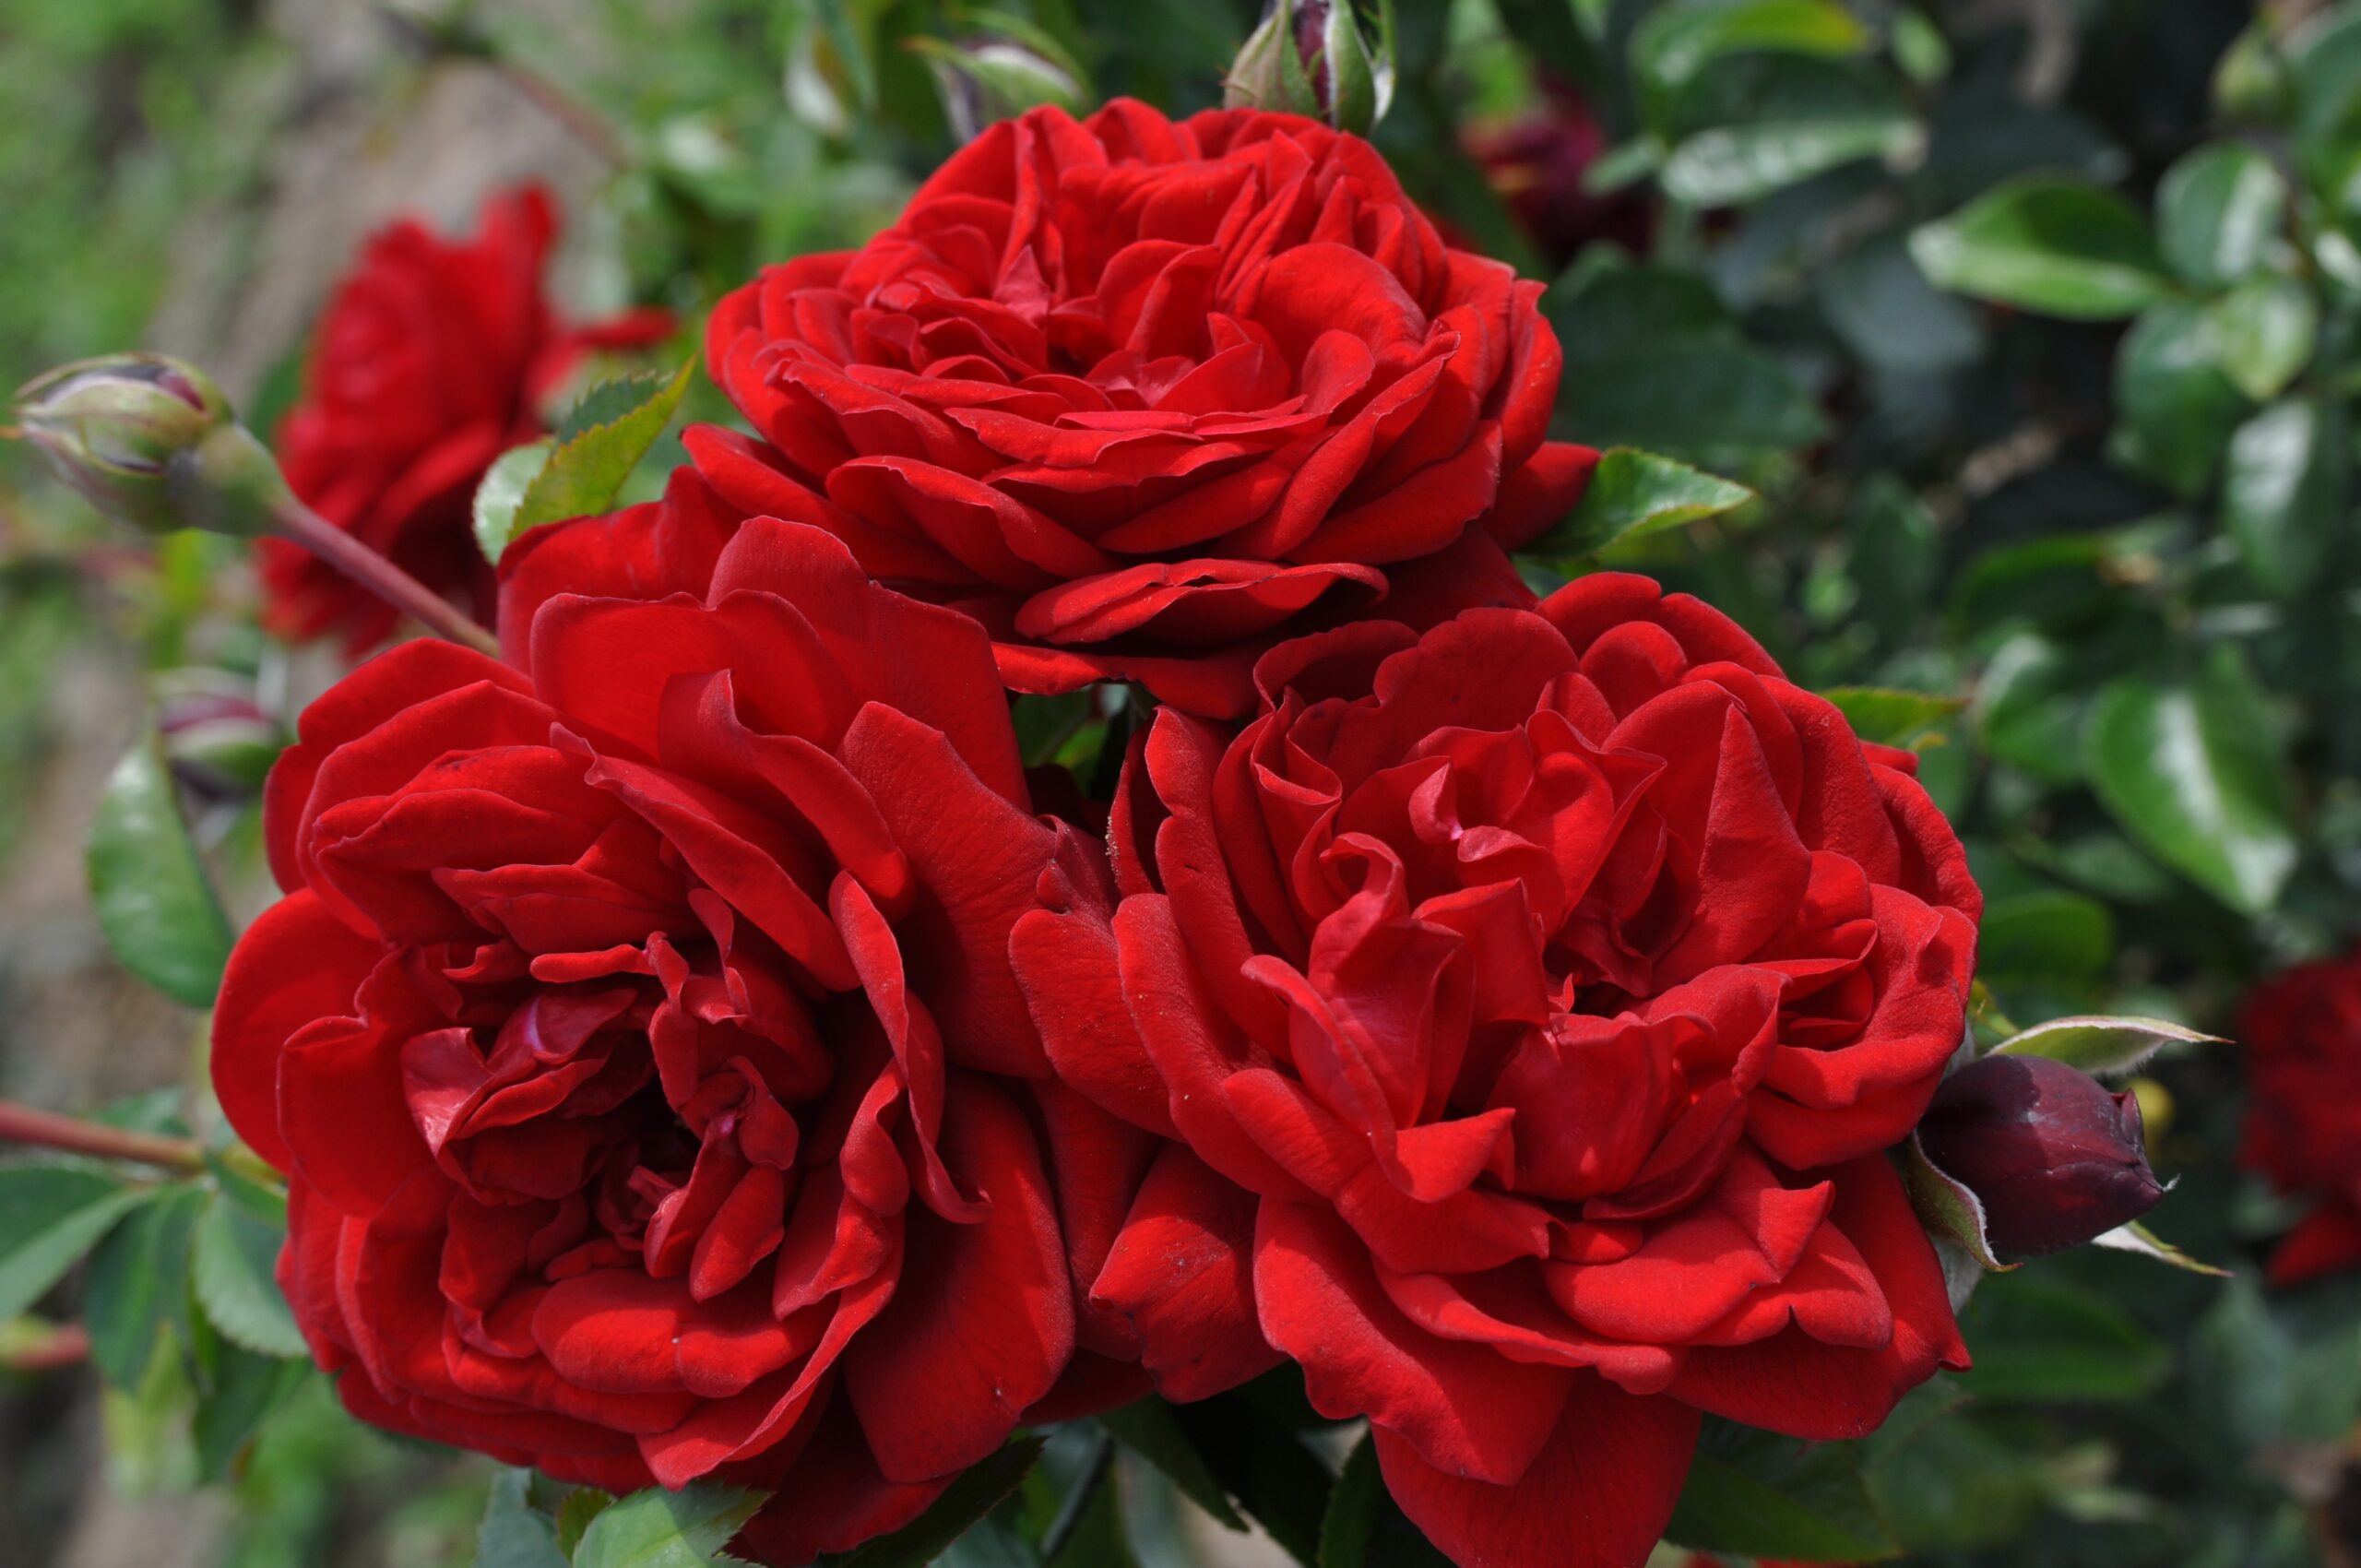 Desmond Tutu™ Sunbelt® rose - Palatine Fruit & Roses